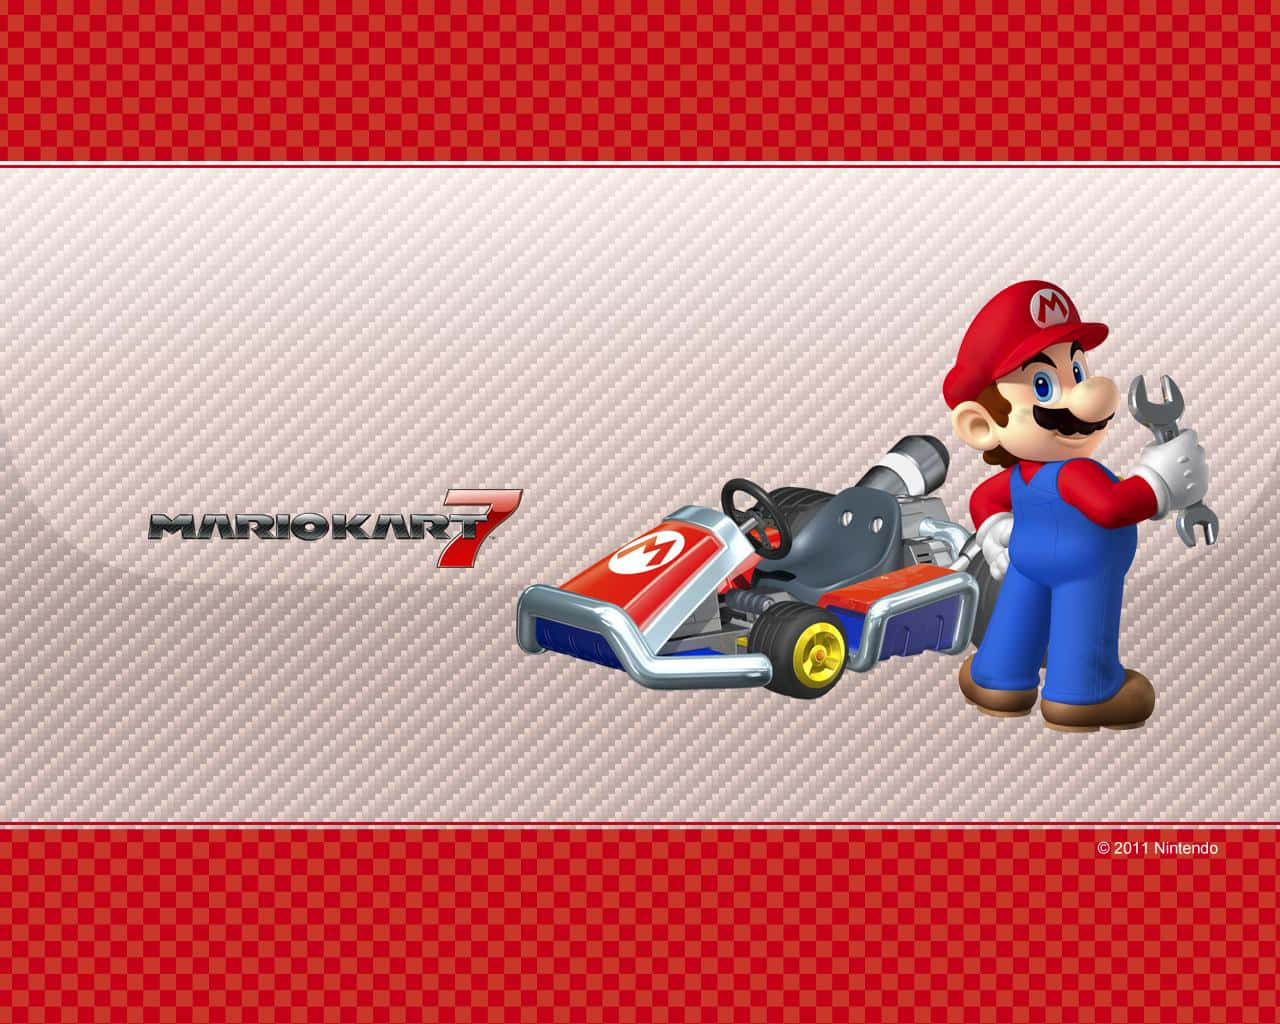 Take the checkered flag with Mario Kart